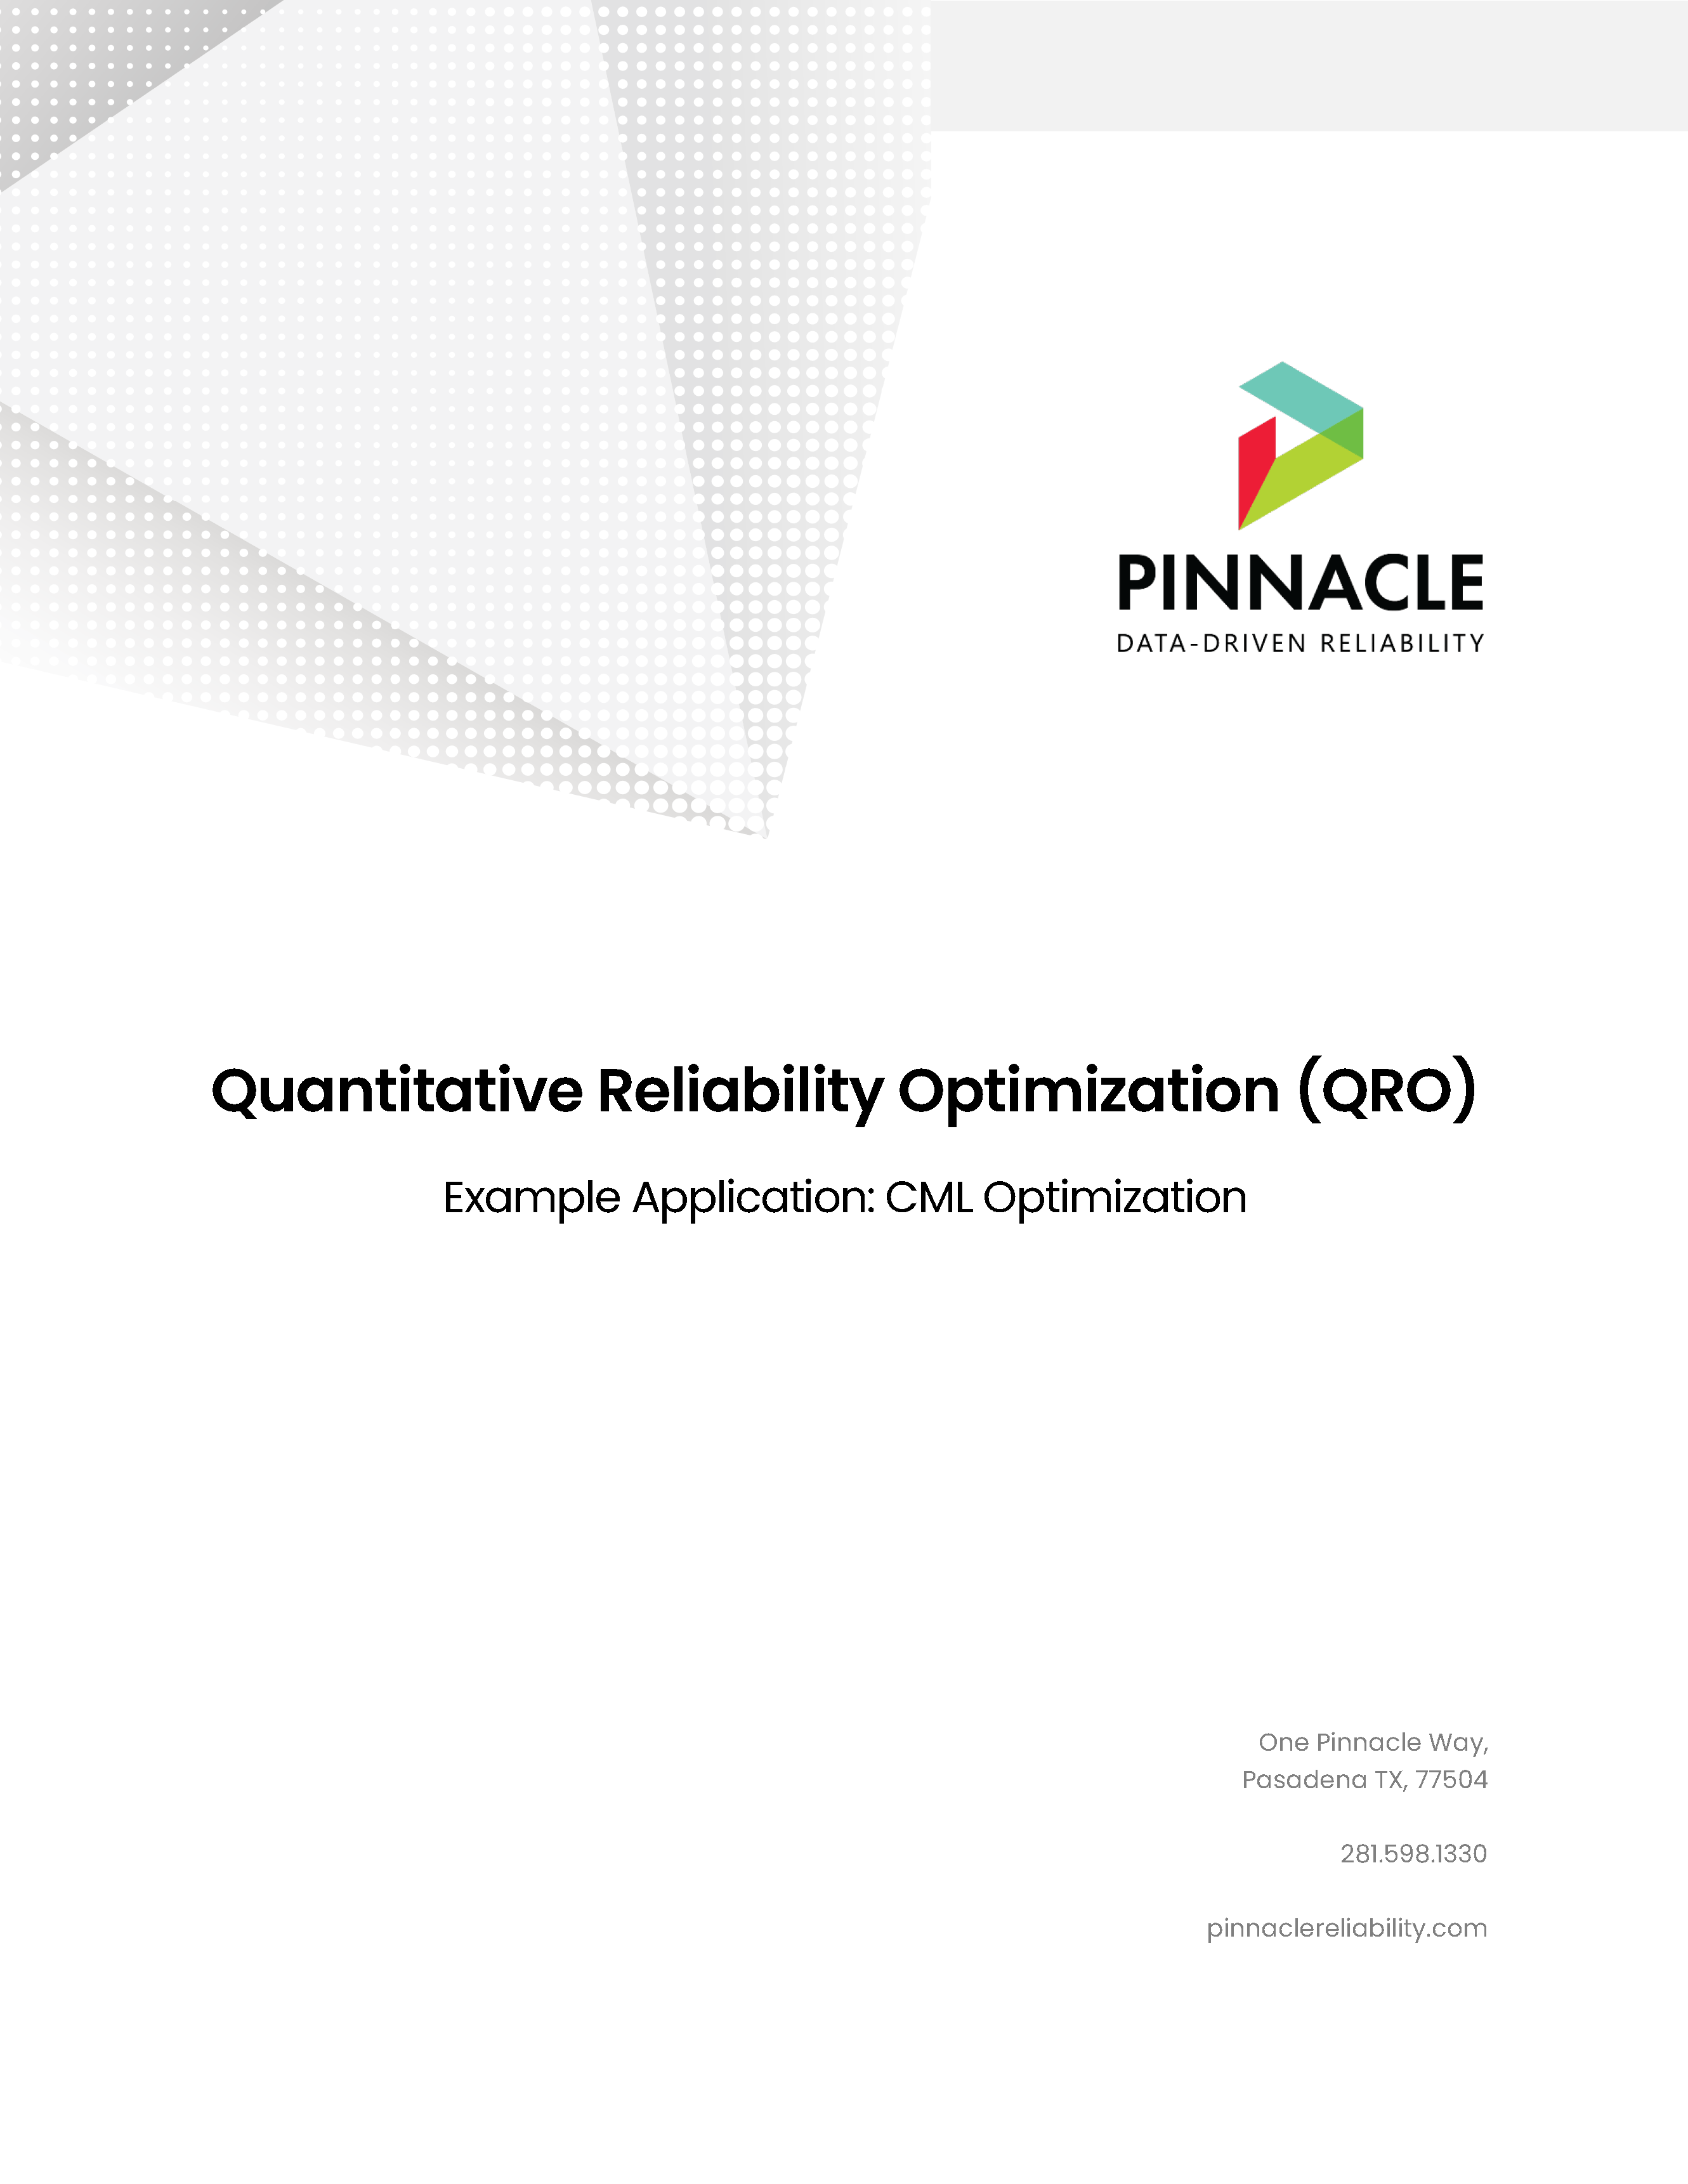 Pinnacle-Quantitative-Reliability-Optimization-QRO-Example-Application_CML-Optimization Cover Page